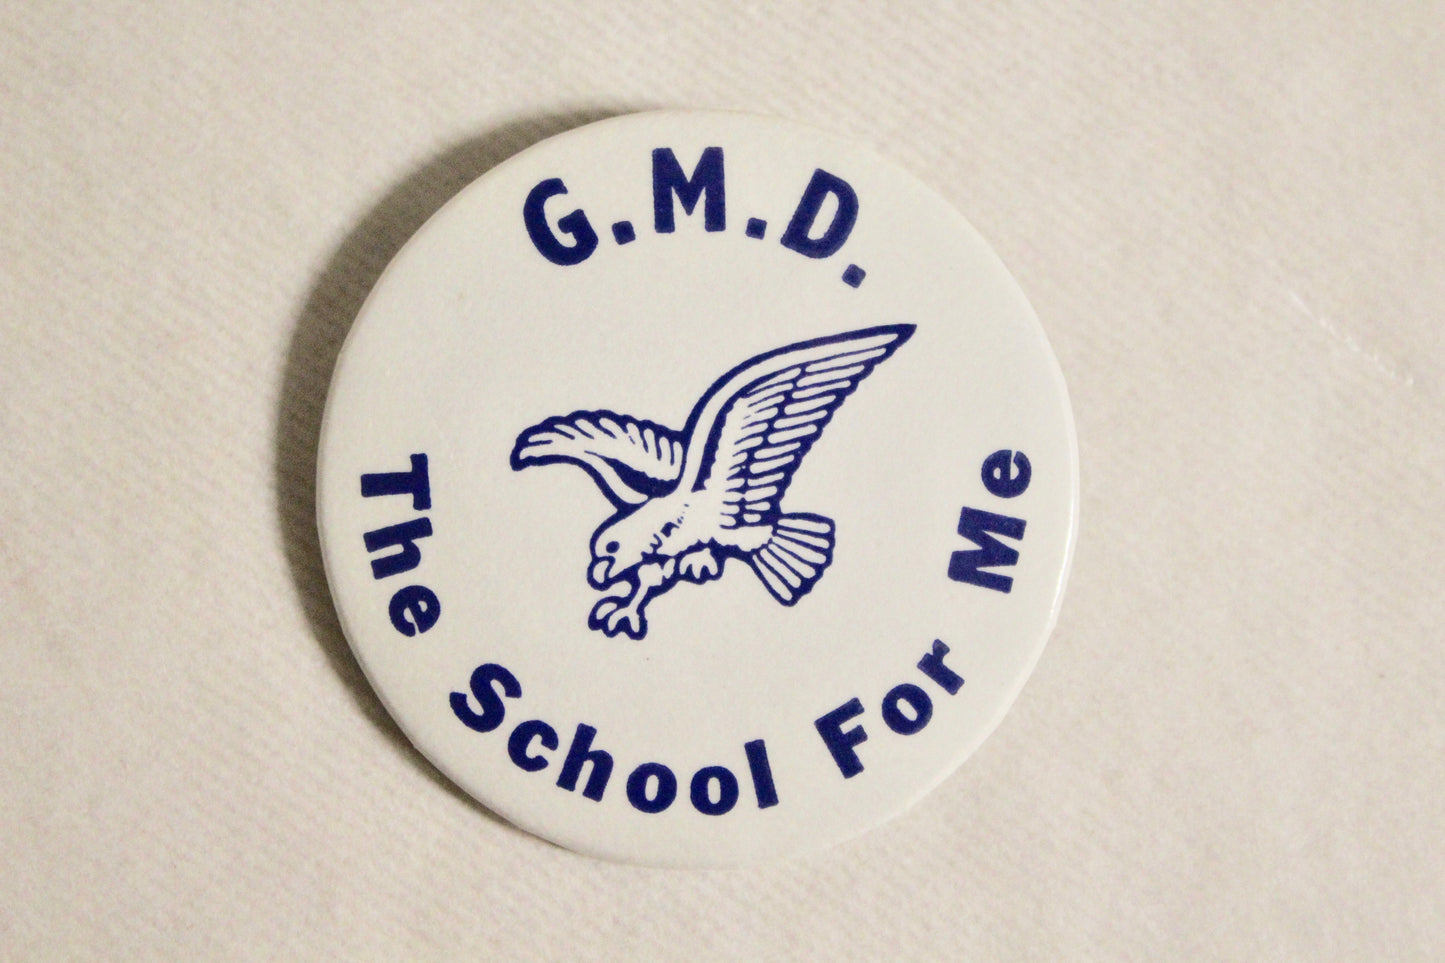 Retro Button - GMD the School for Me